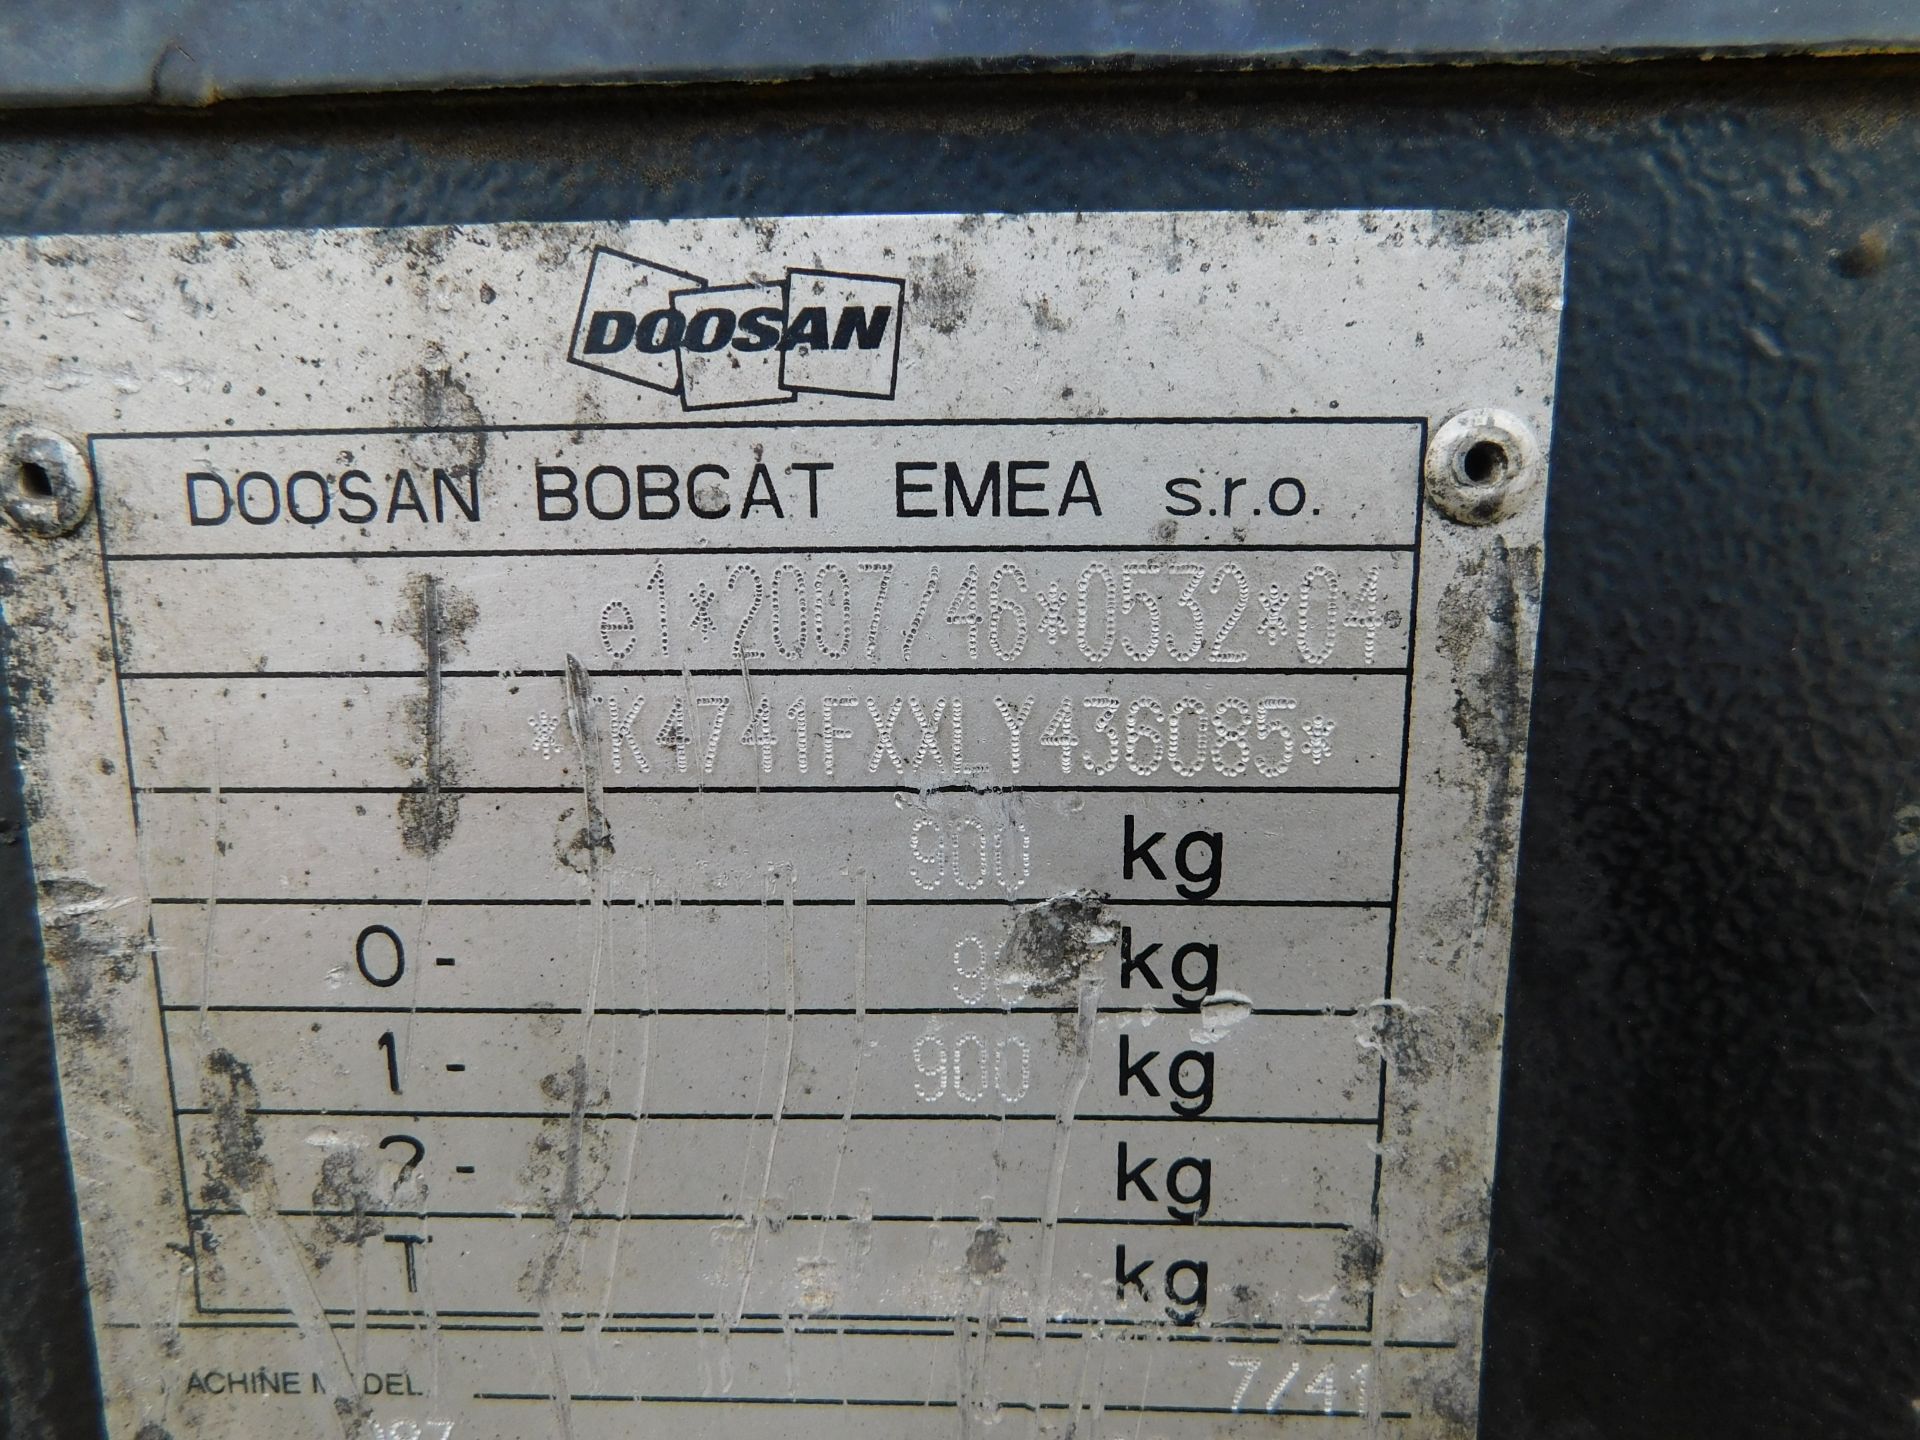 Doosan 7-41+ Trailer Mounted Compressor 2020), Serial Number TK4741FXXL436085, 165 hours ( - Image 6 of 10